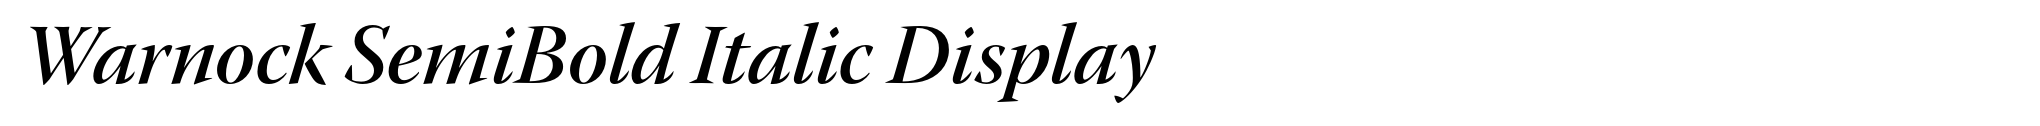 Warnock SemiBold Italic Display image